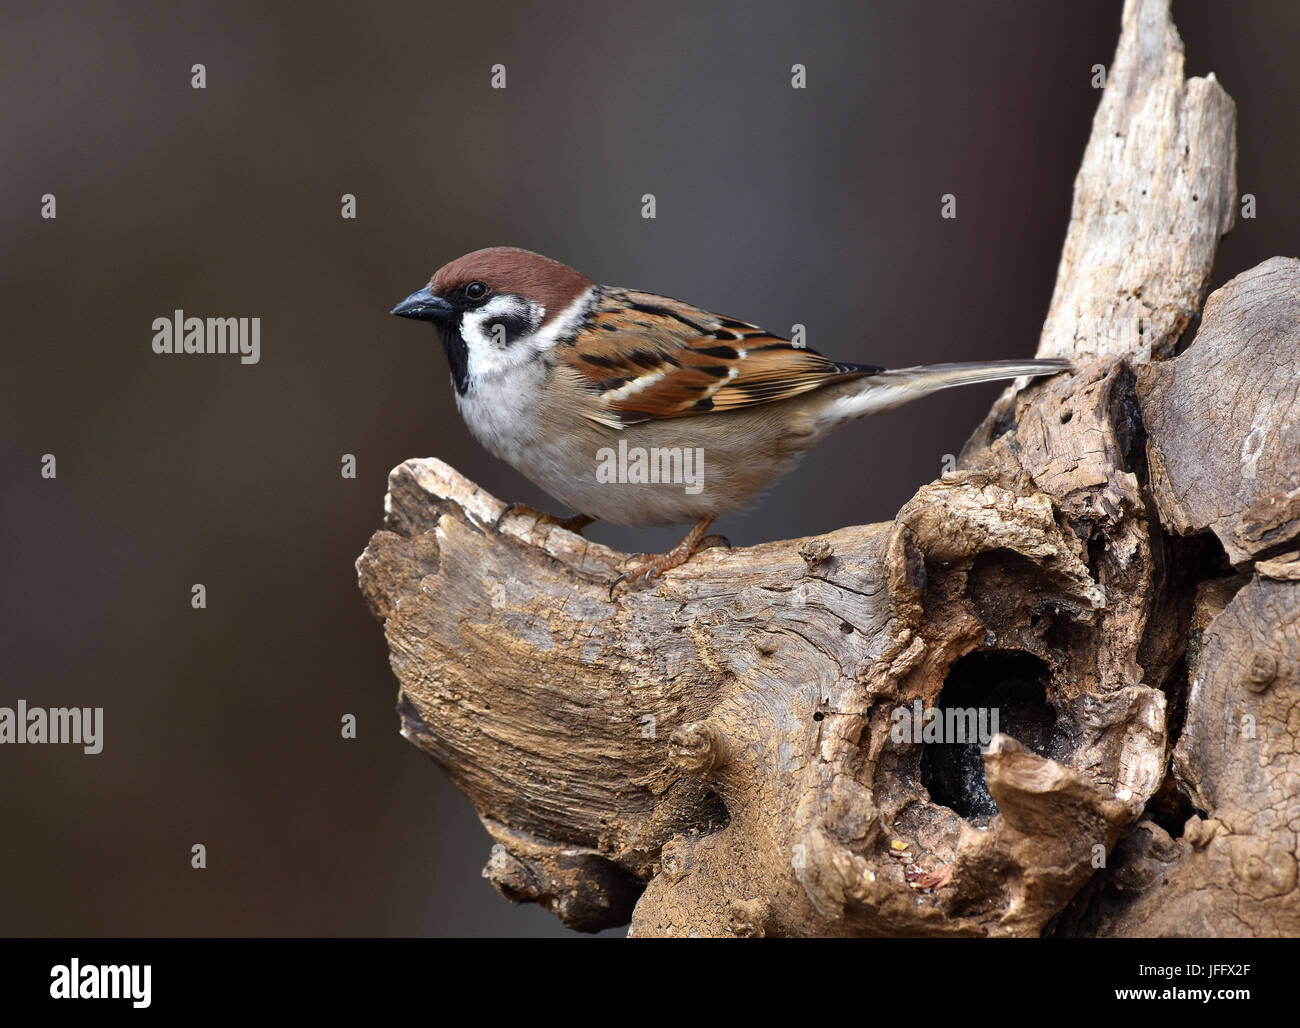 Sparrow; passera mattugia; Passer montanus; Foto Stock